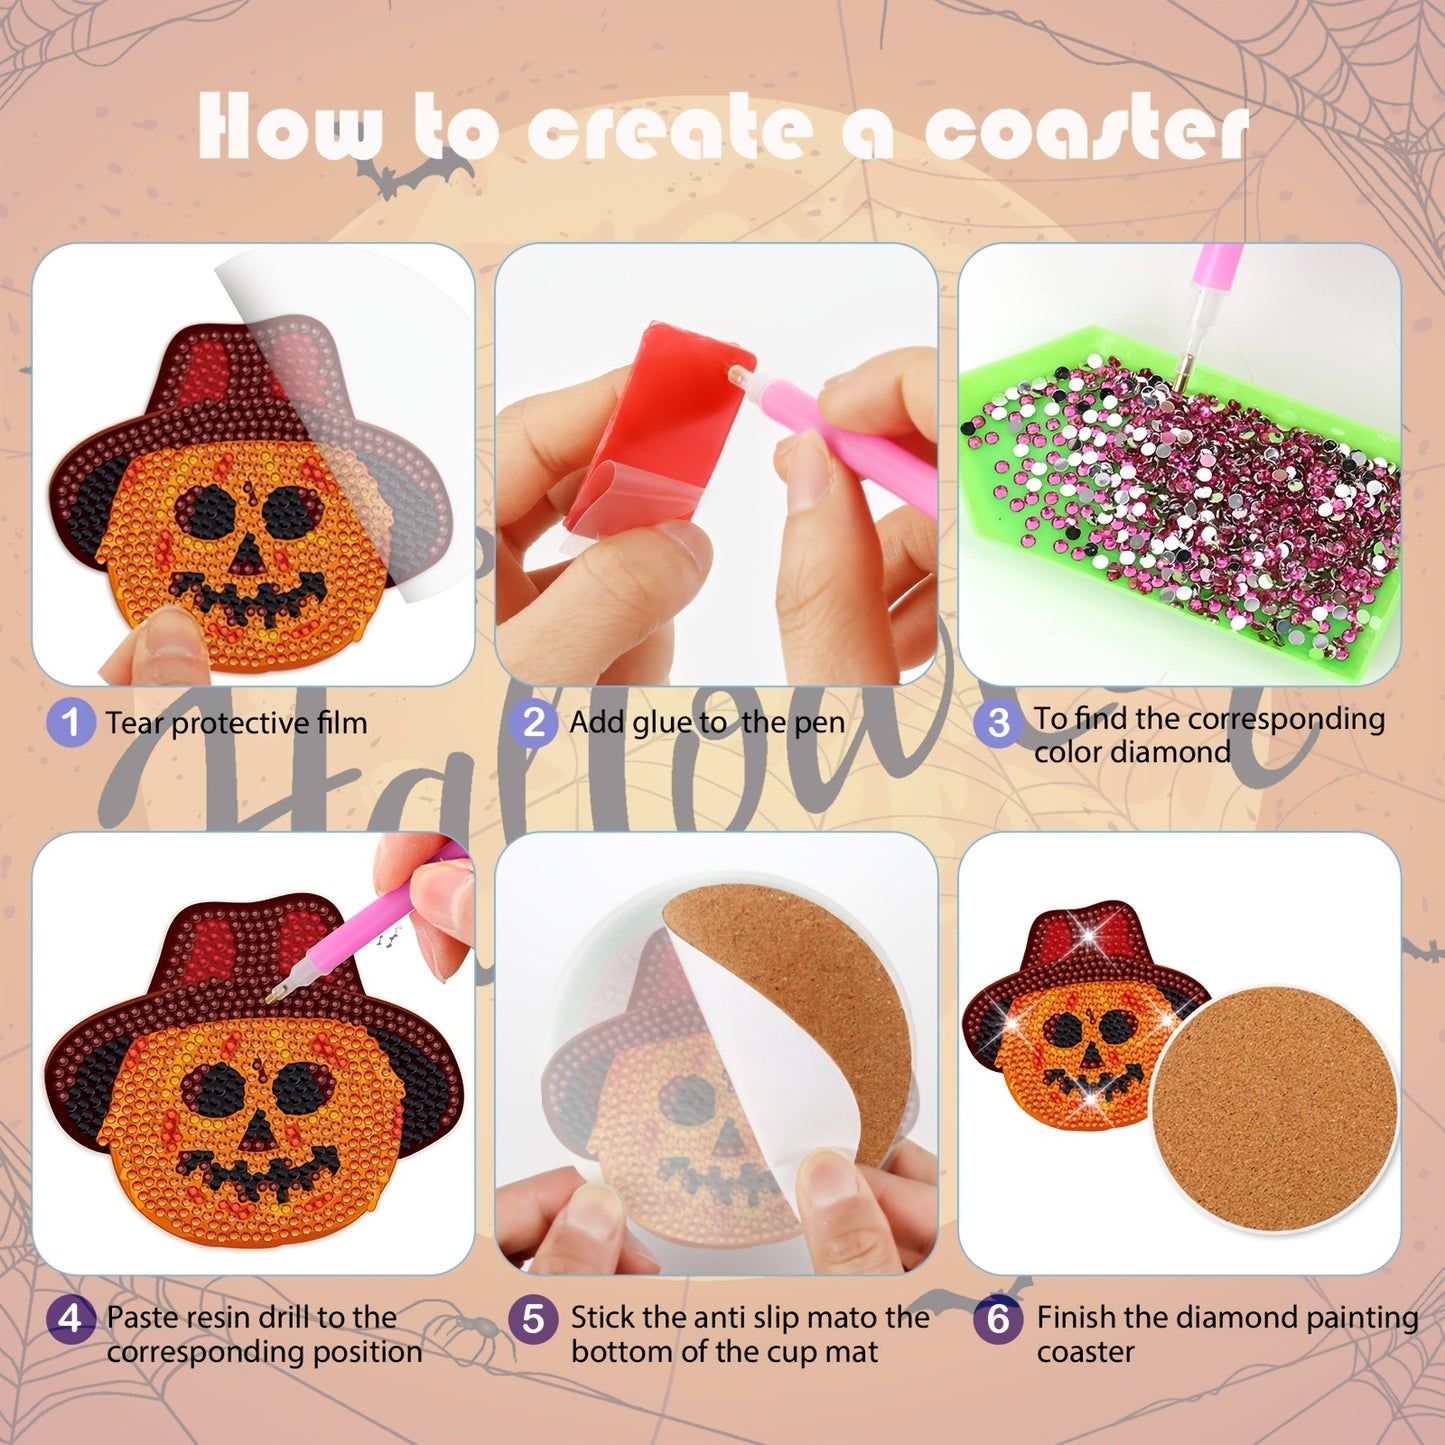 Diy 8pcs/set Pumpkin Halloween  Diamond Painting Coasters with Holder